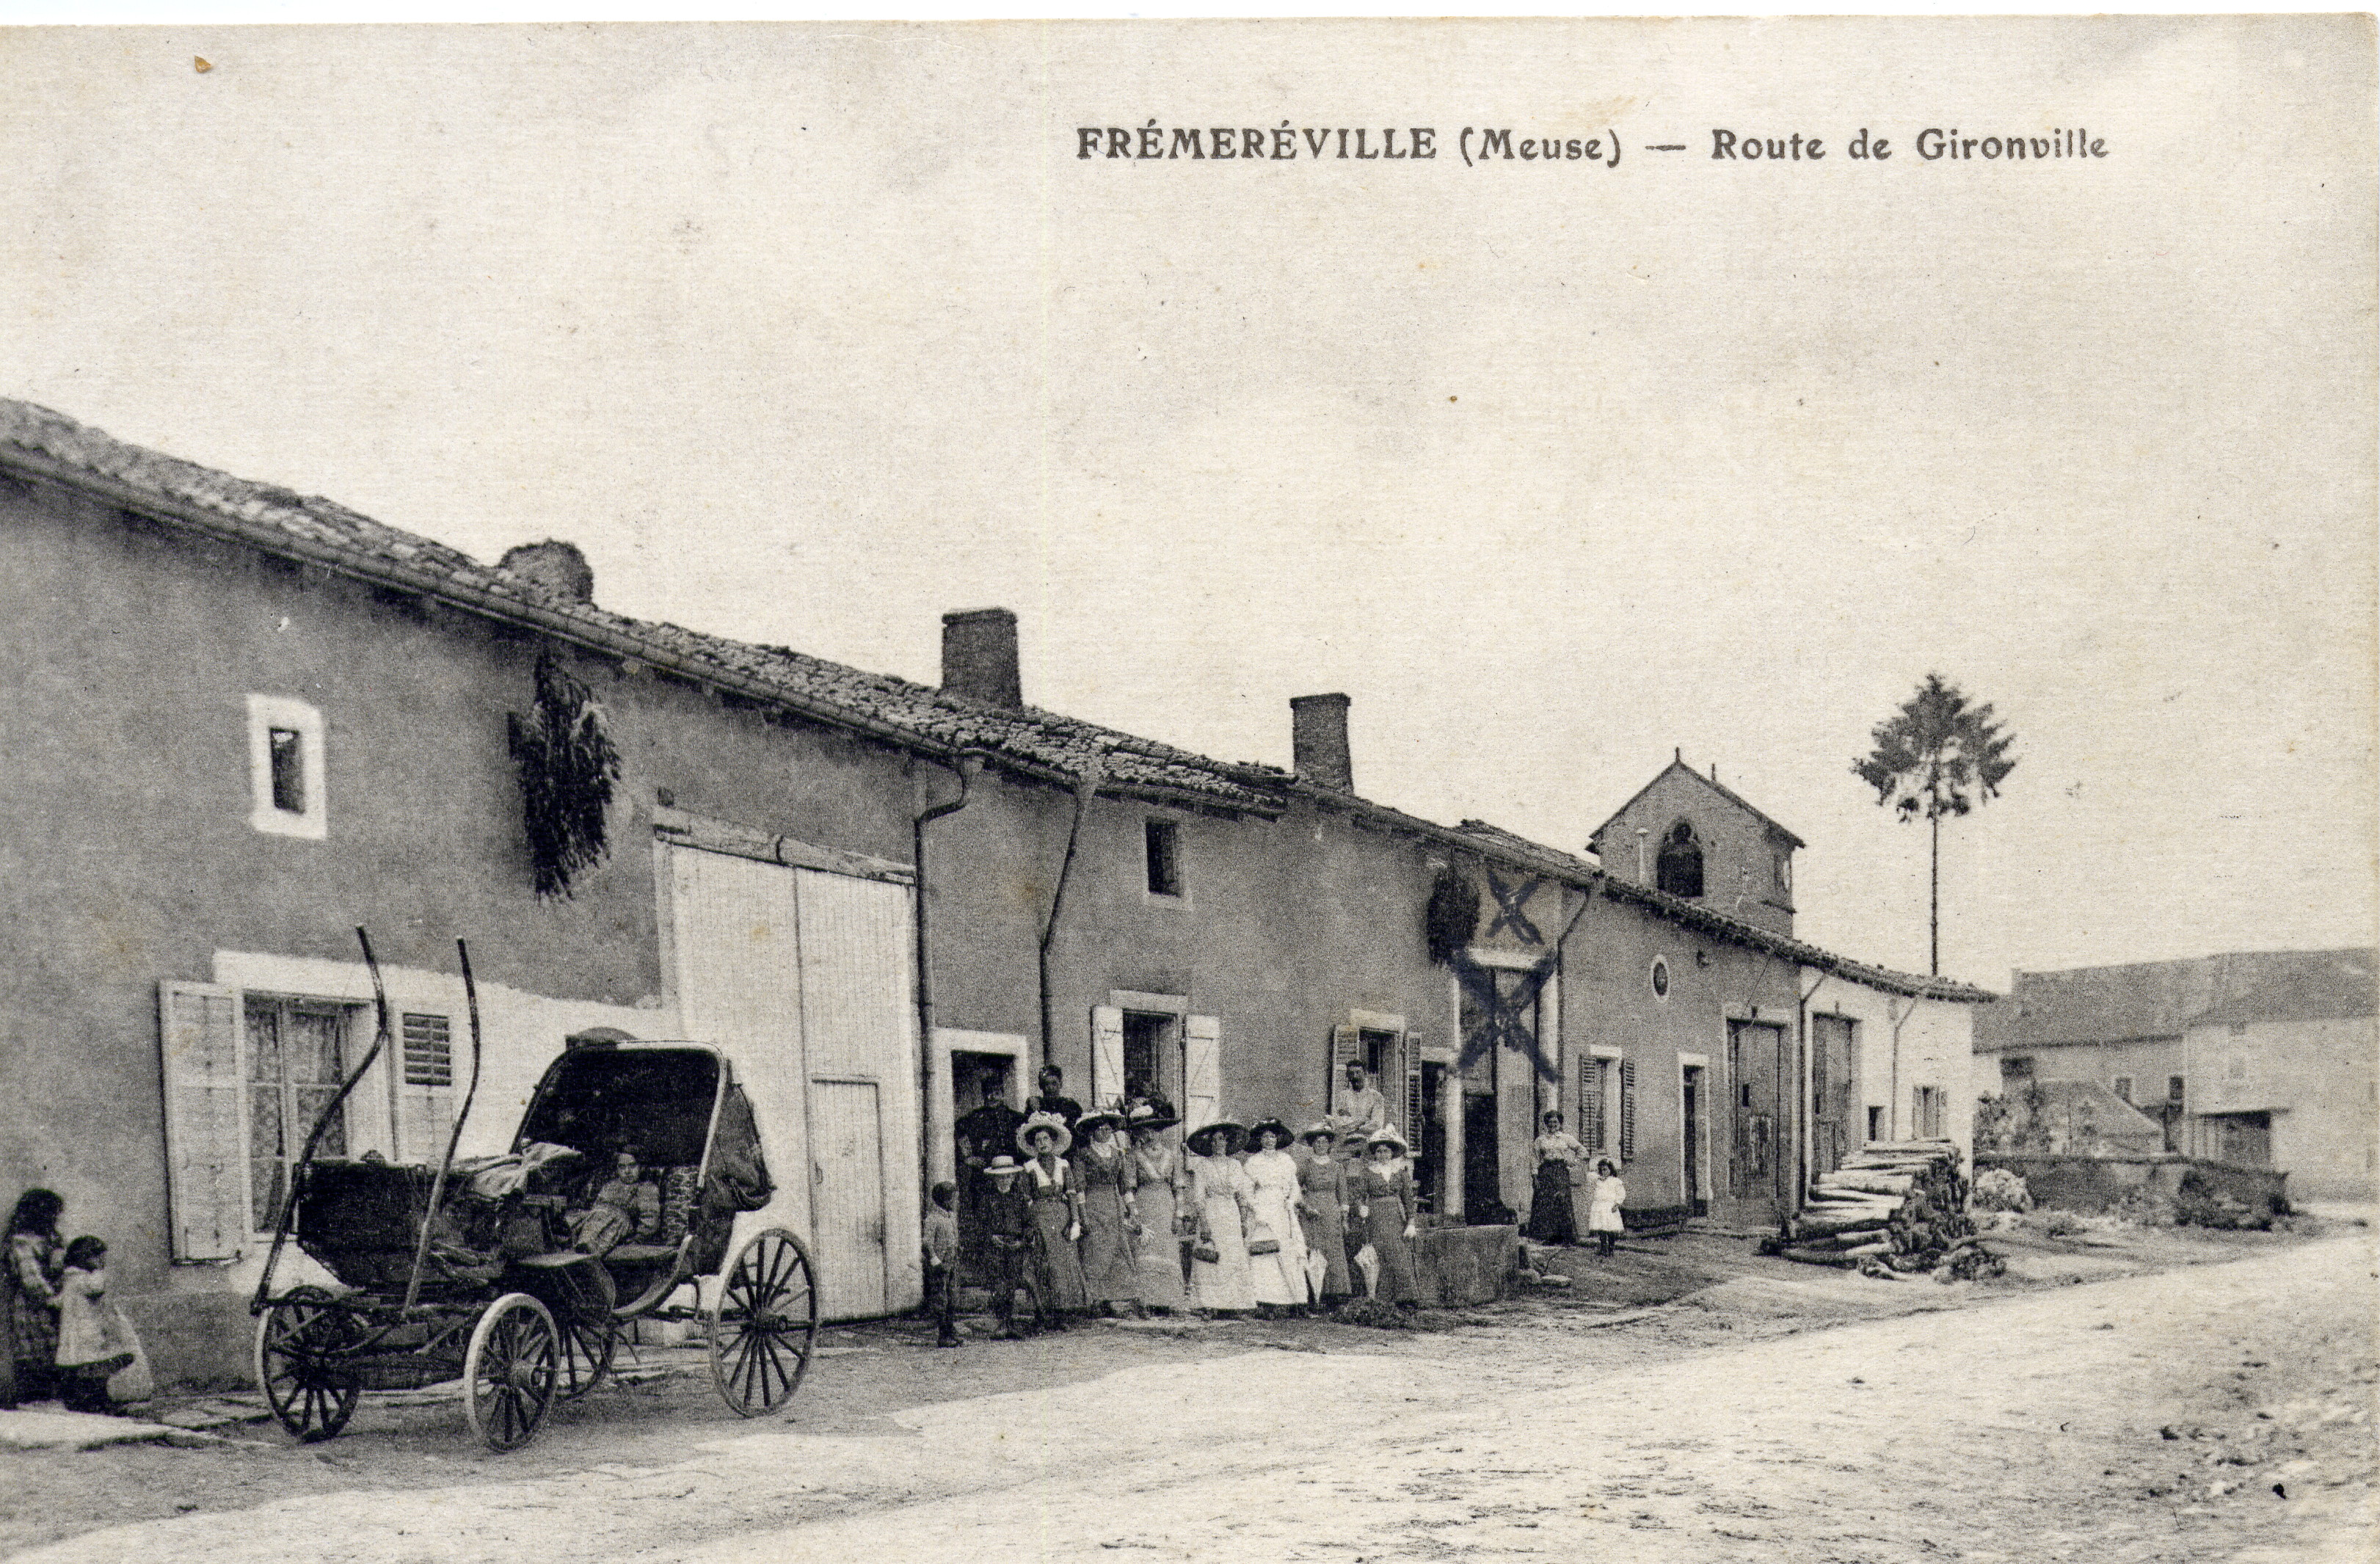 Frmerville